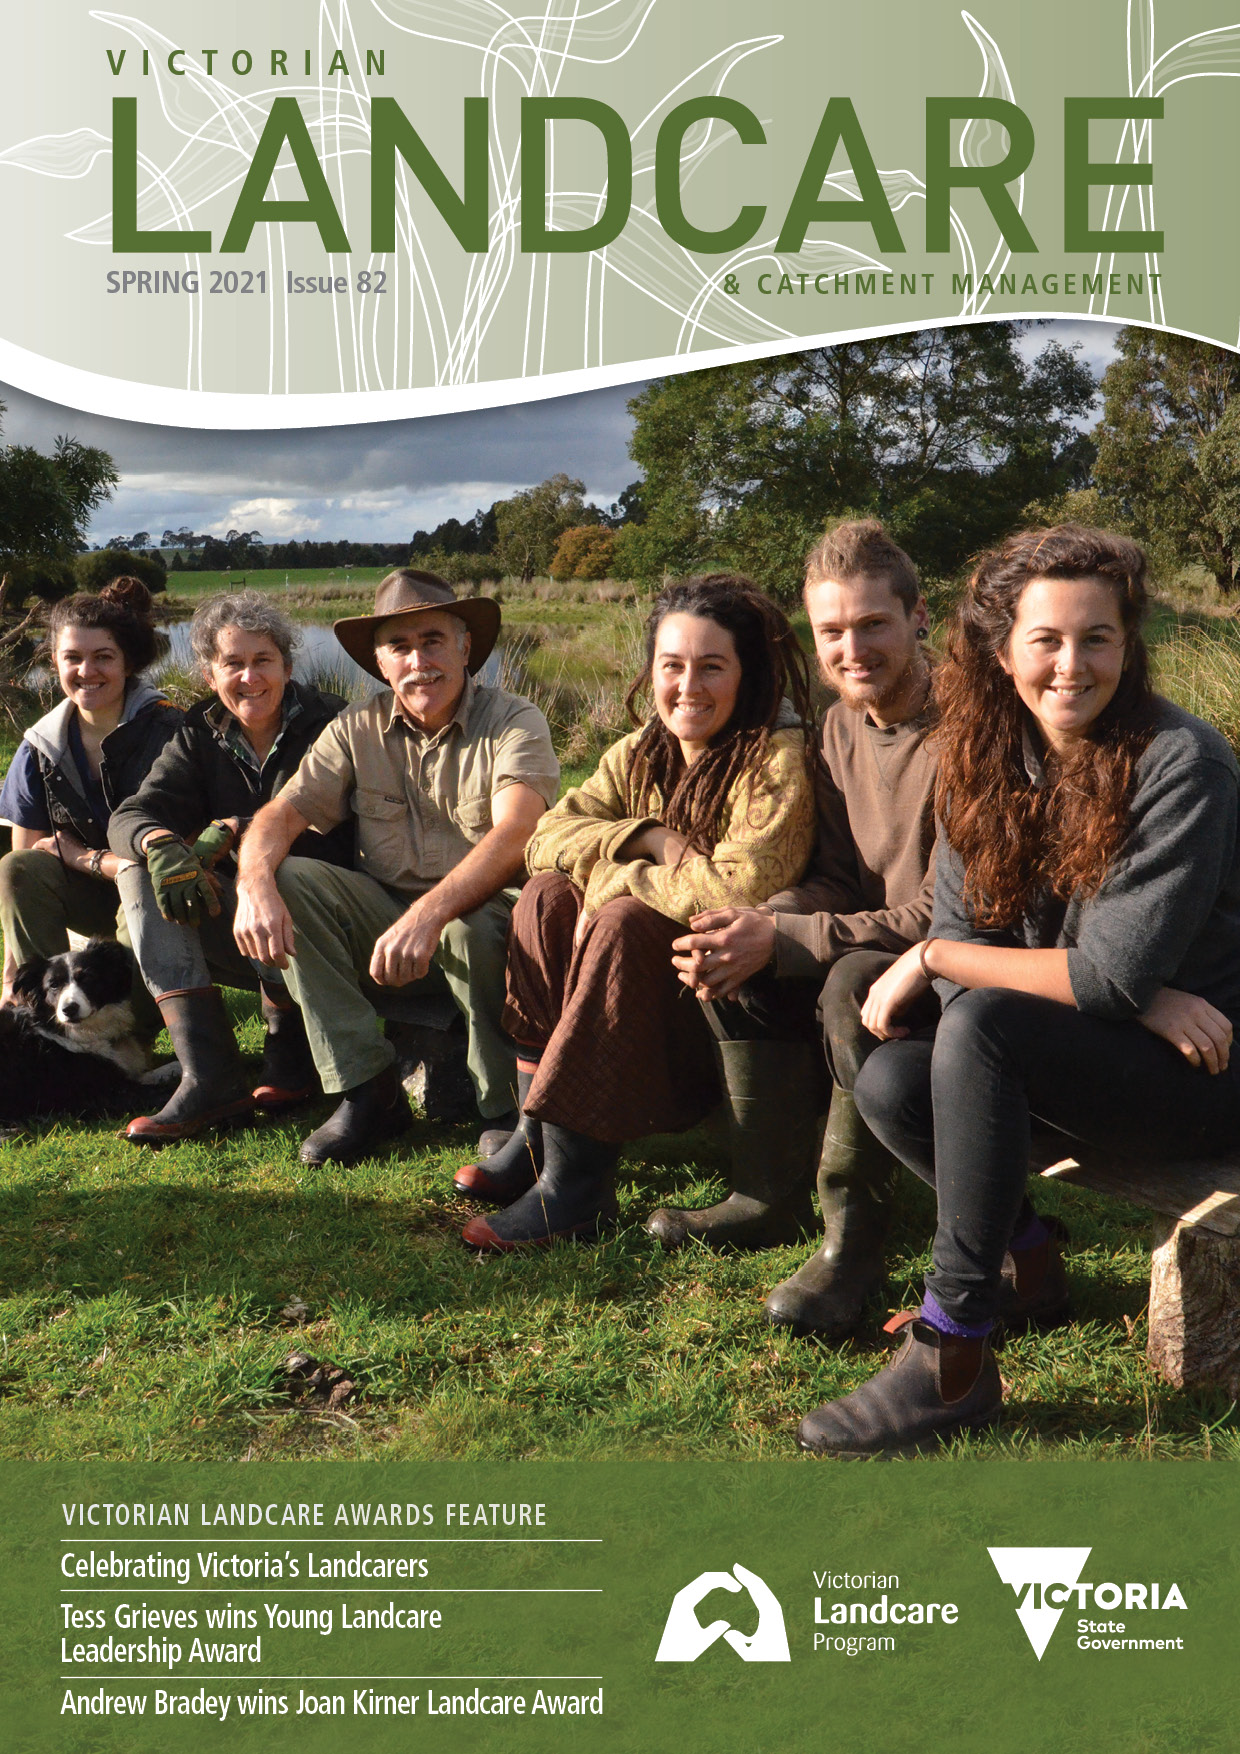 Victorian Landcare magazine Spring 2021 cover7